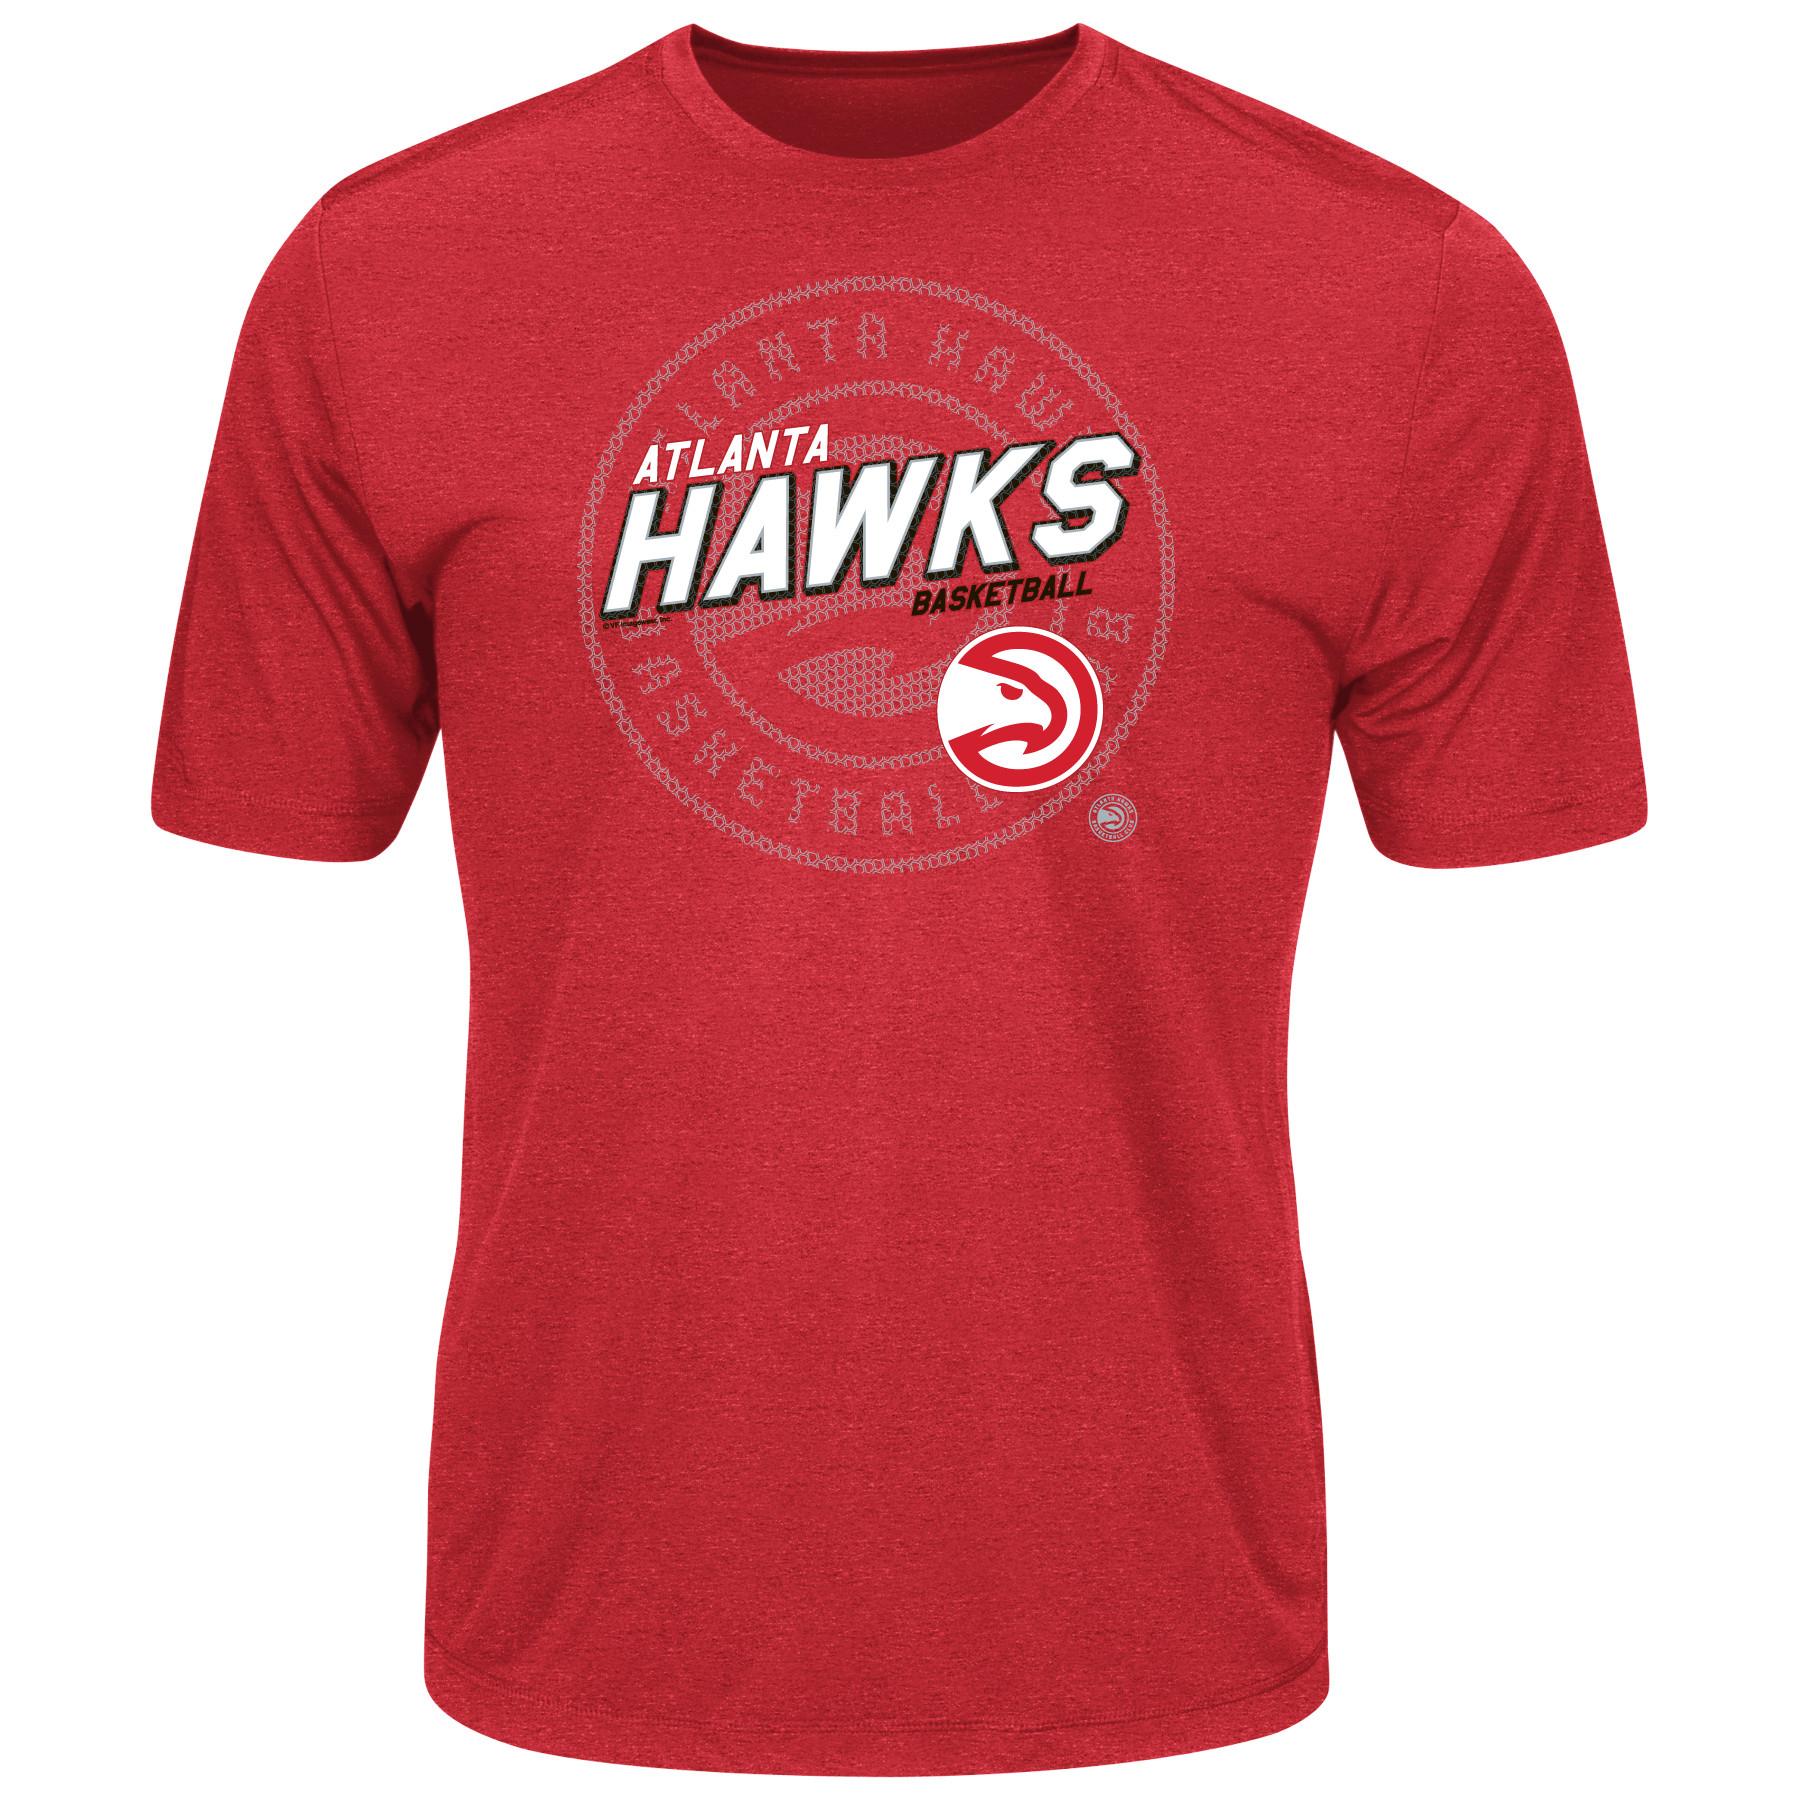 NBA(CANONICAL) Men's Big & Tall Heathered T-Shirt - Atlanta Hawks